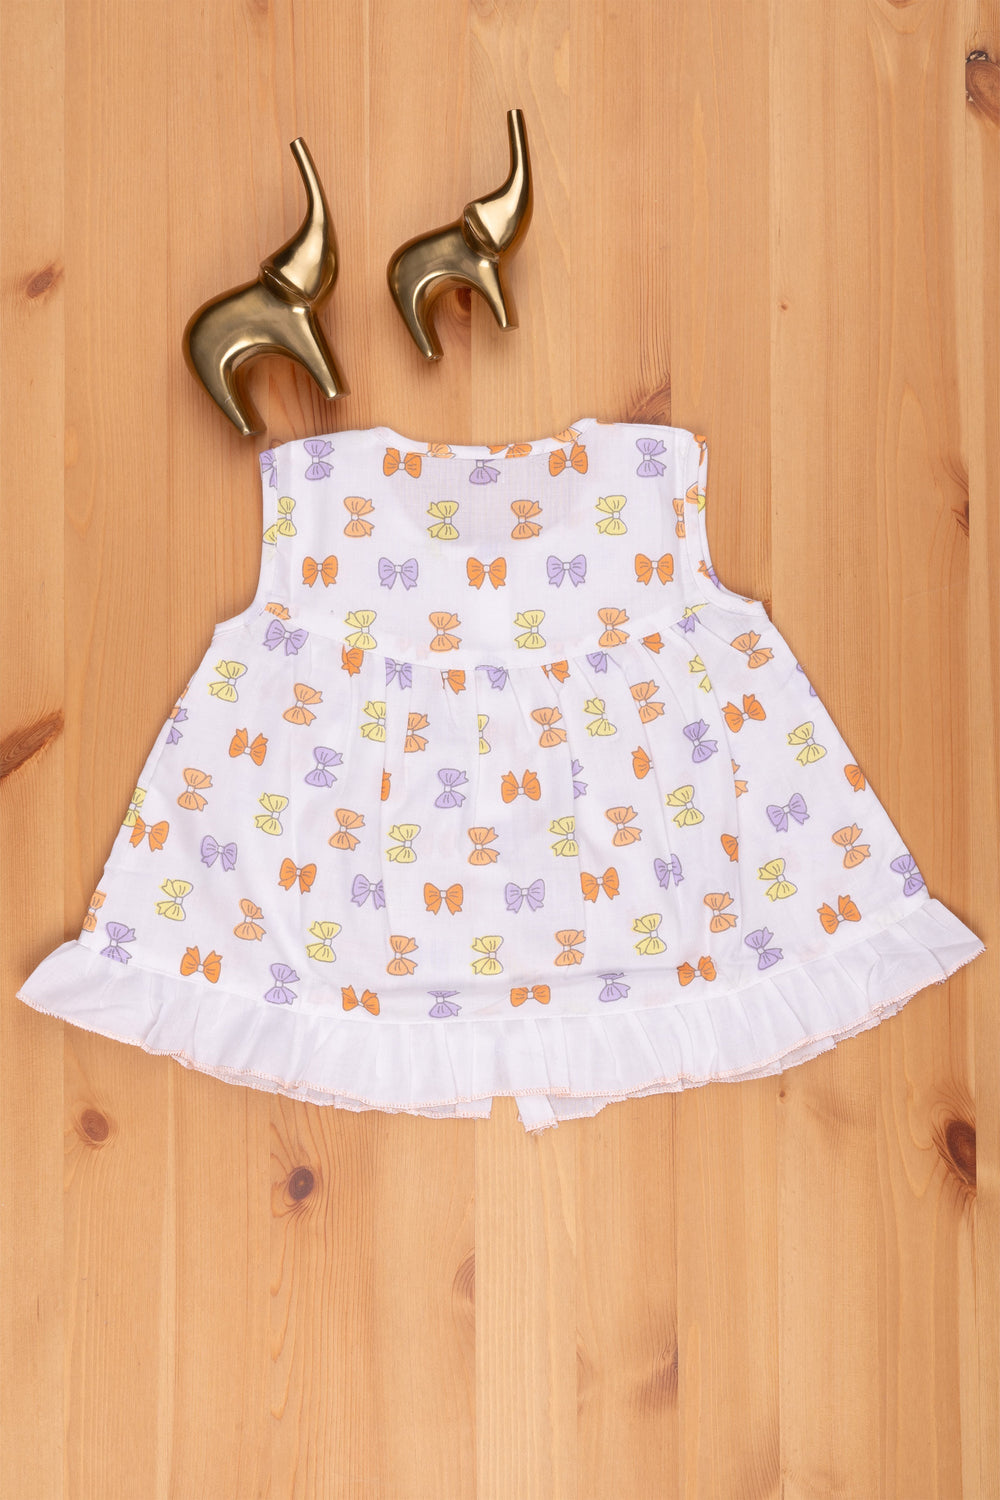 The Nesavu Baby Frock / Jhabla Colorful Bow Print White Dress: Perfect Little Girls Choice Nesavu 12 (3M) / Peach BFJ445B-12 Fancy Baby Dress Online | Printed Fancy Frock For Girls | The Nesavu